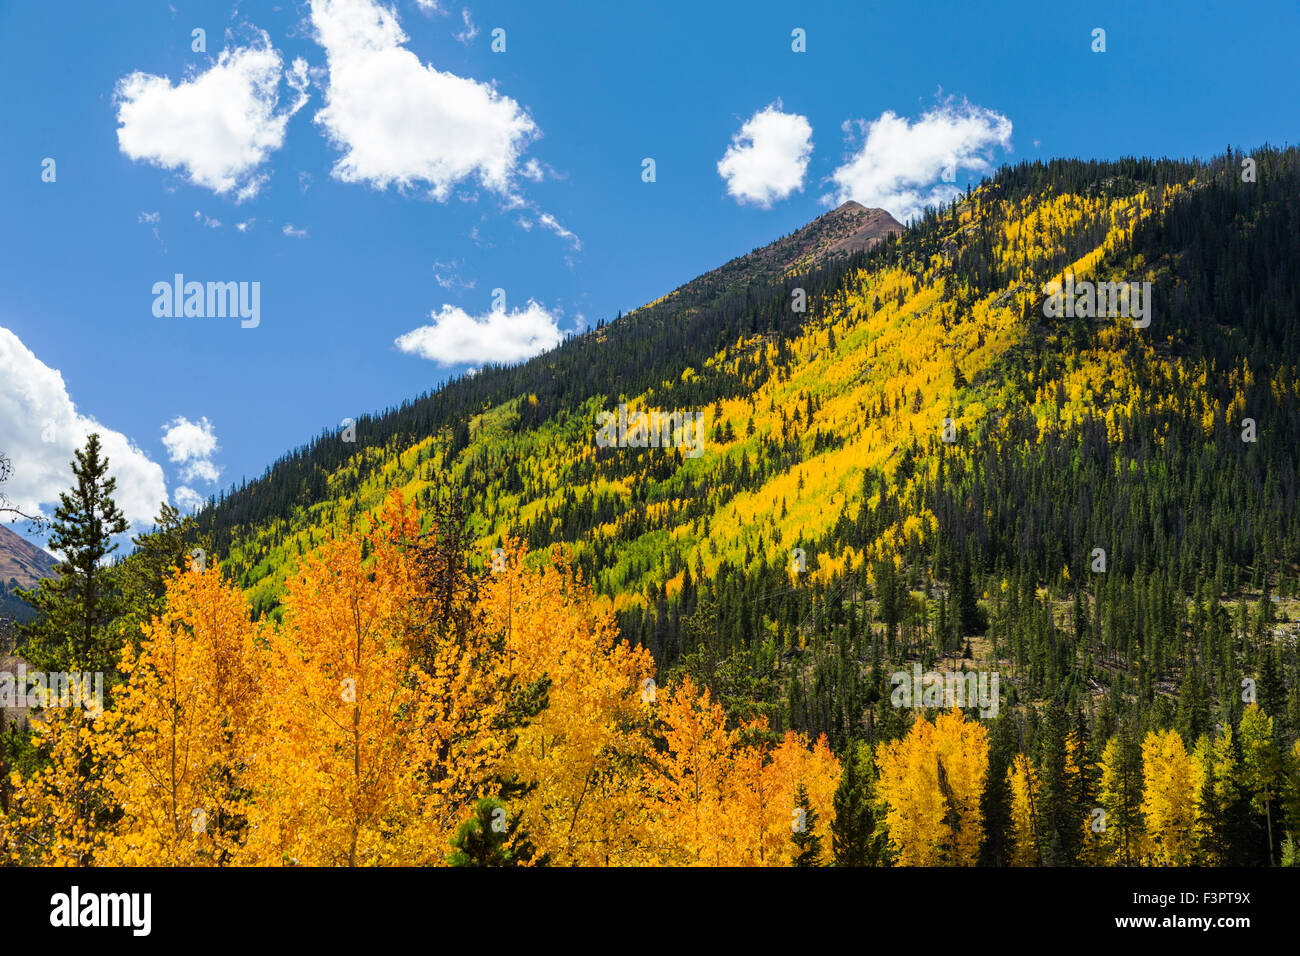 Aspen tree leaves turn autumn gold, central Colorado near Red Mountain, Rocky Mountains, USA Stock Photo